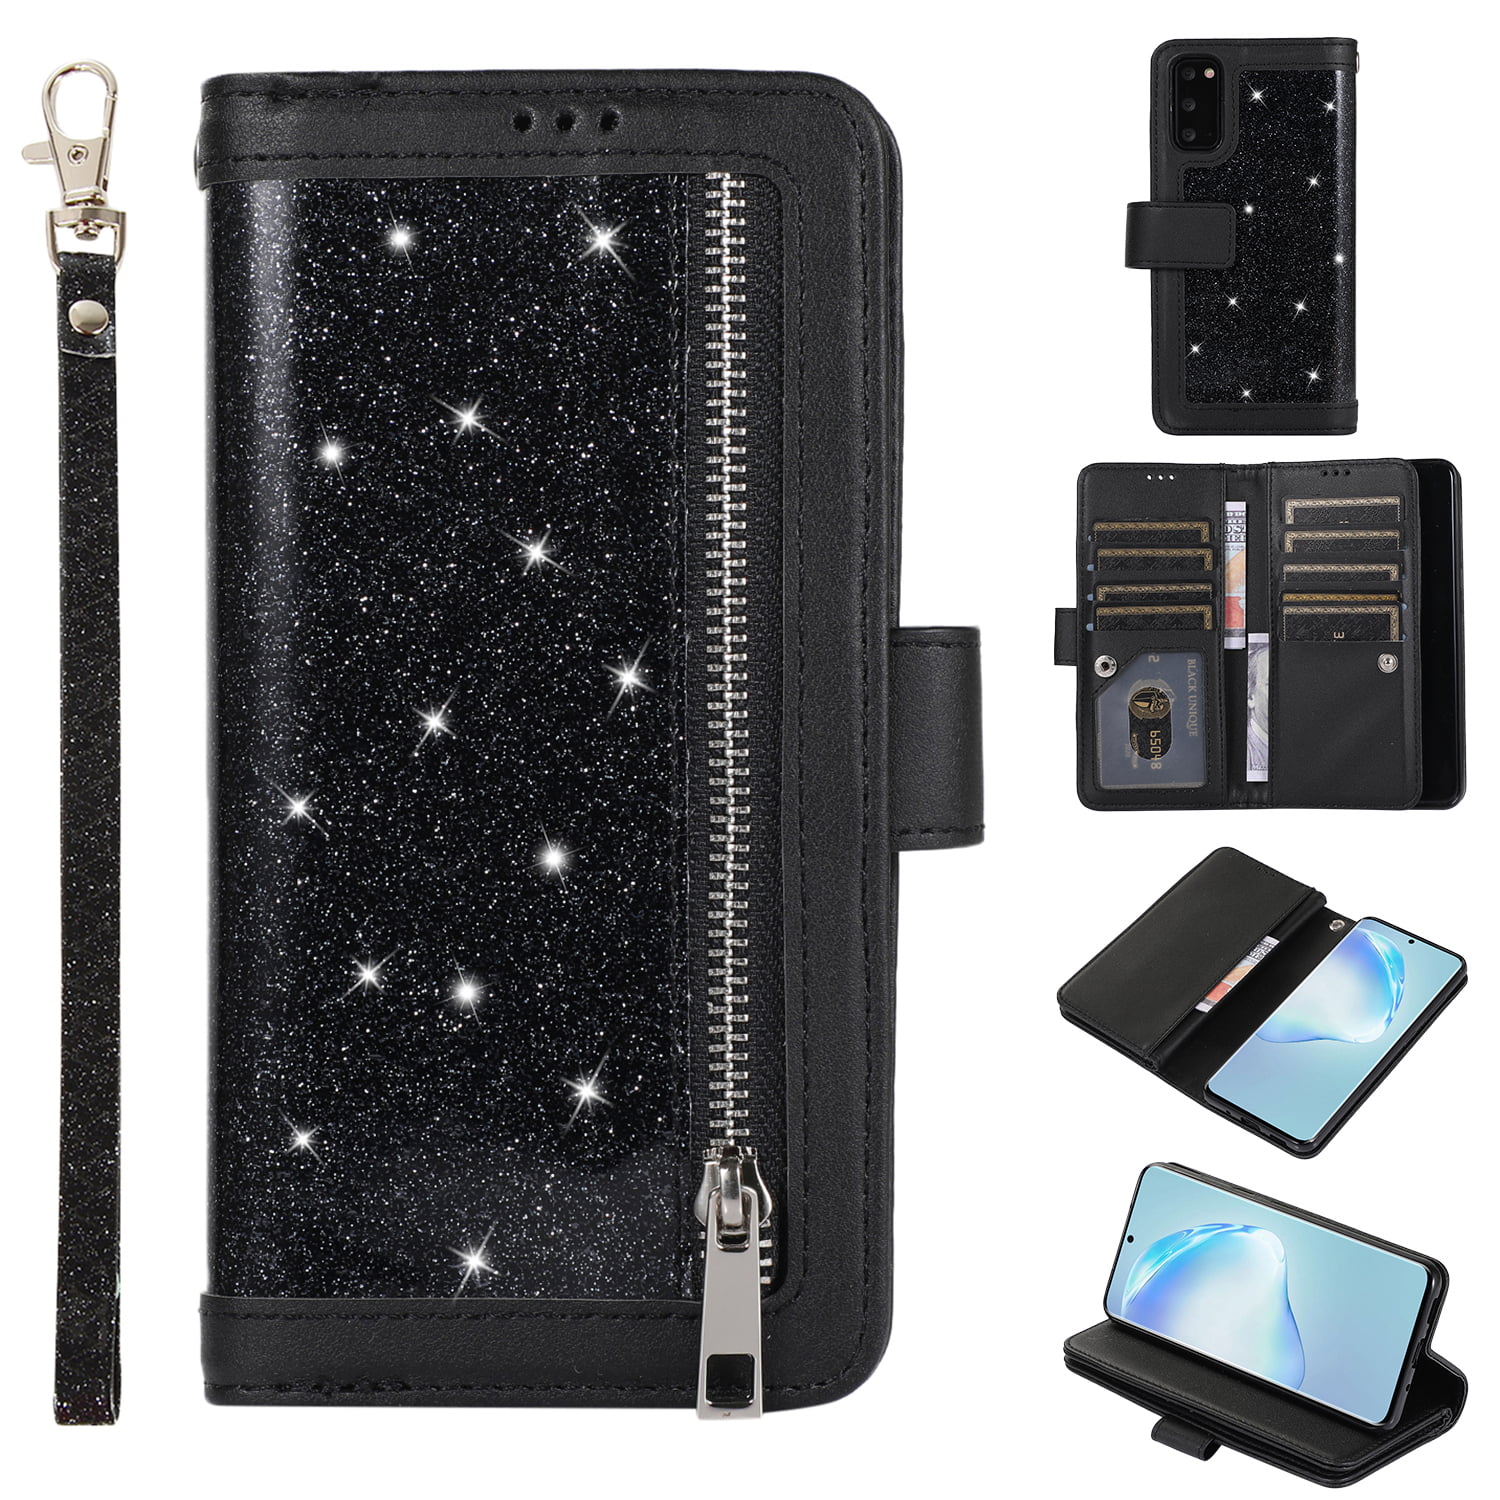 J530 Shockproof Bumper Cover/Premium Wallet Case amaze!uk Galaxy J5 2017 Galaxy J5 2017 J530 Case Cover/Samsung J5 2017 Butterfly Floral Case Leather Flip Kickstand